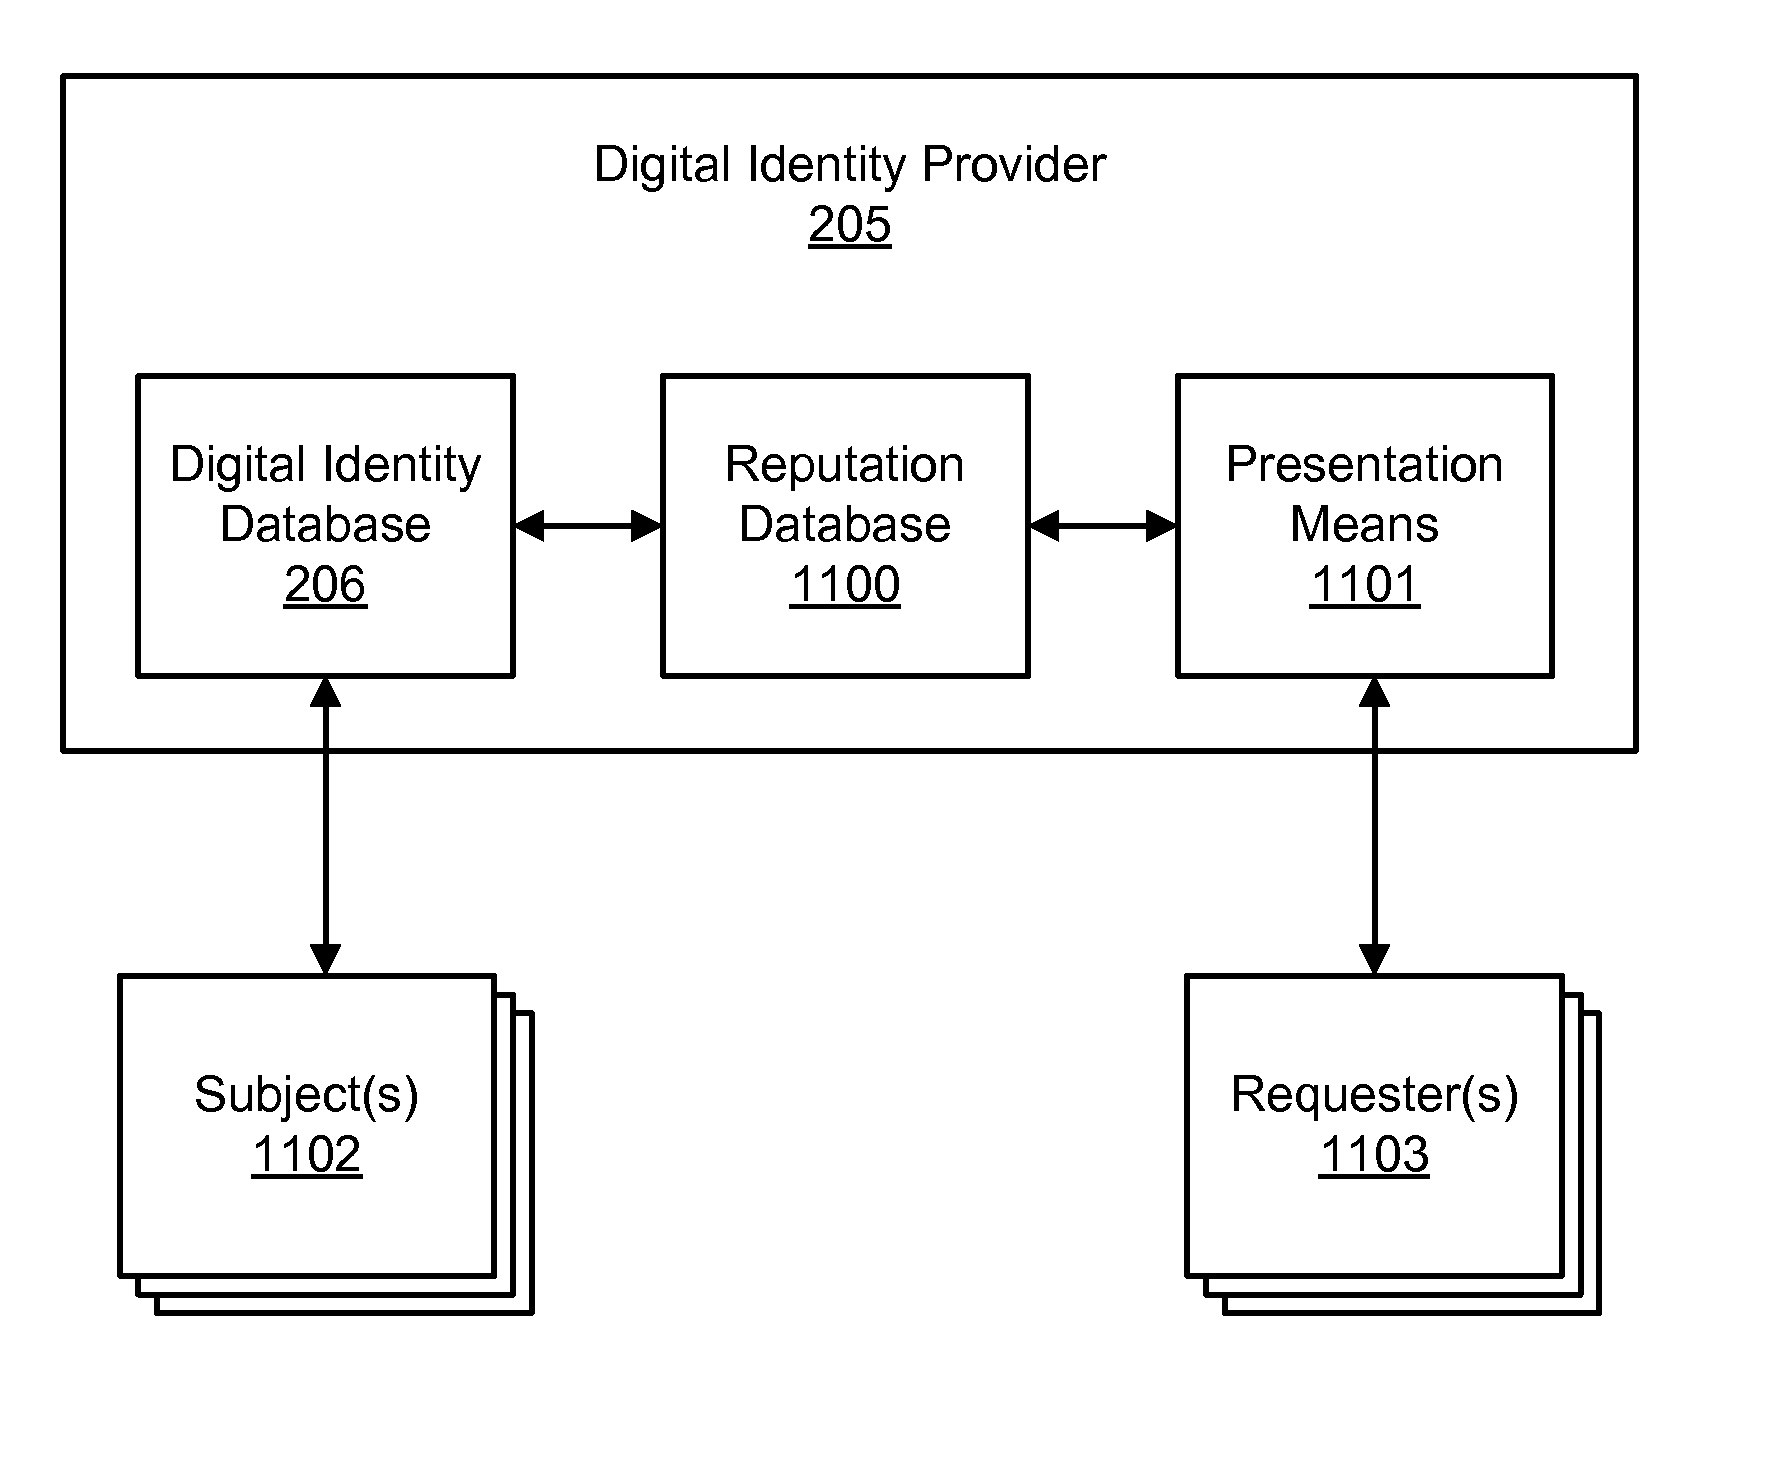 Digital identity related reputation tracking and publishing